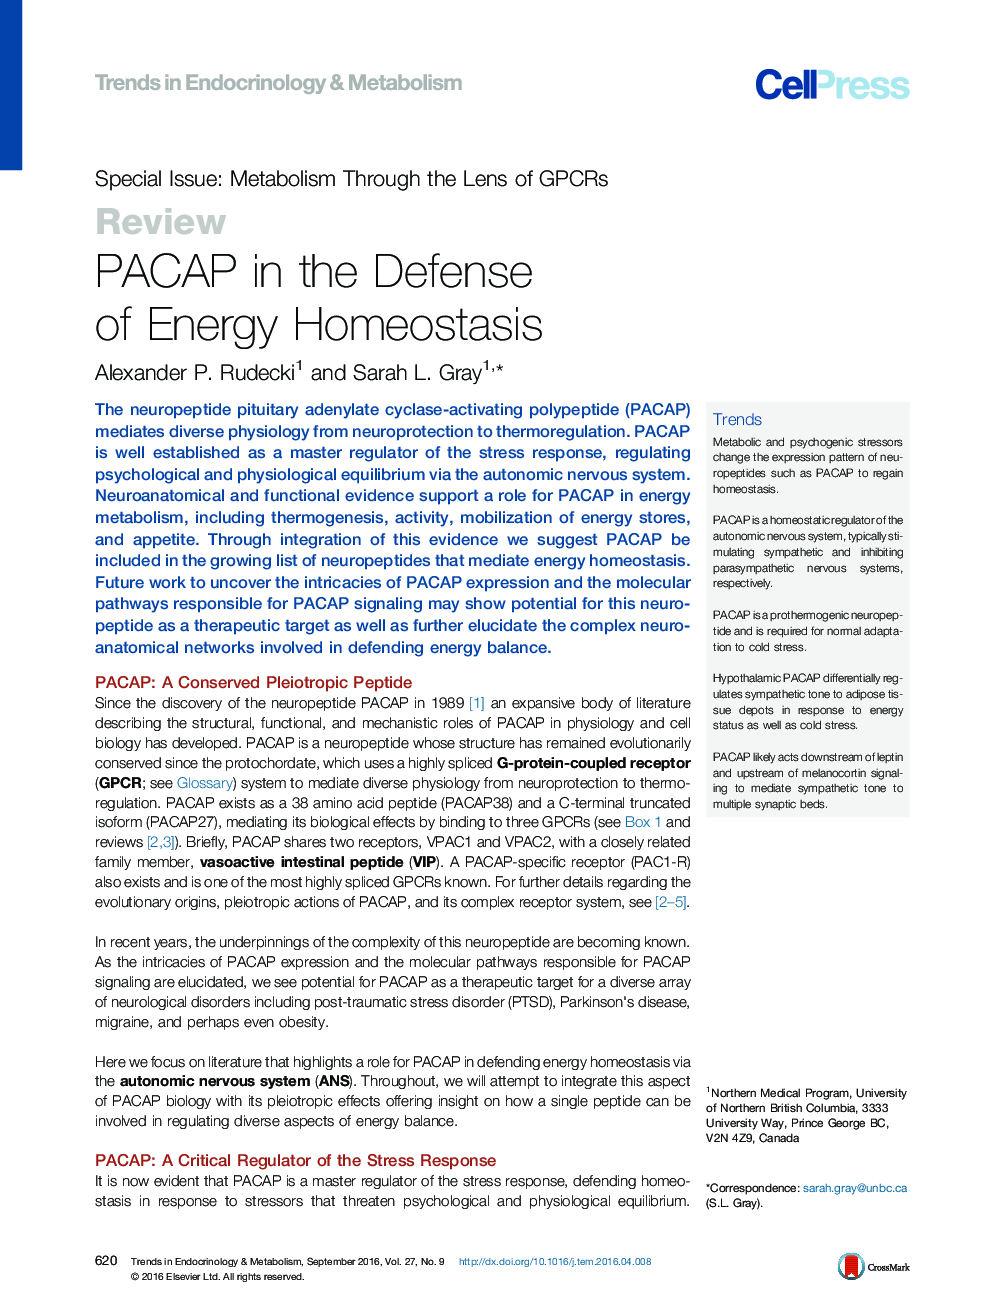 PACAP in the Defense of Energy Homeostasis